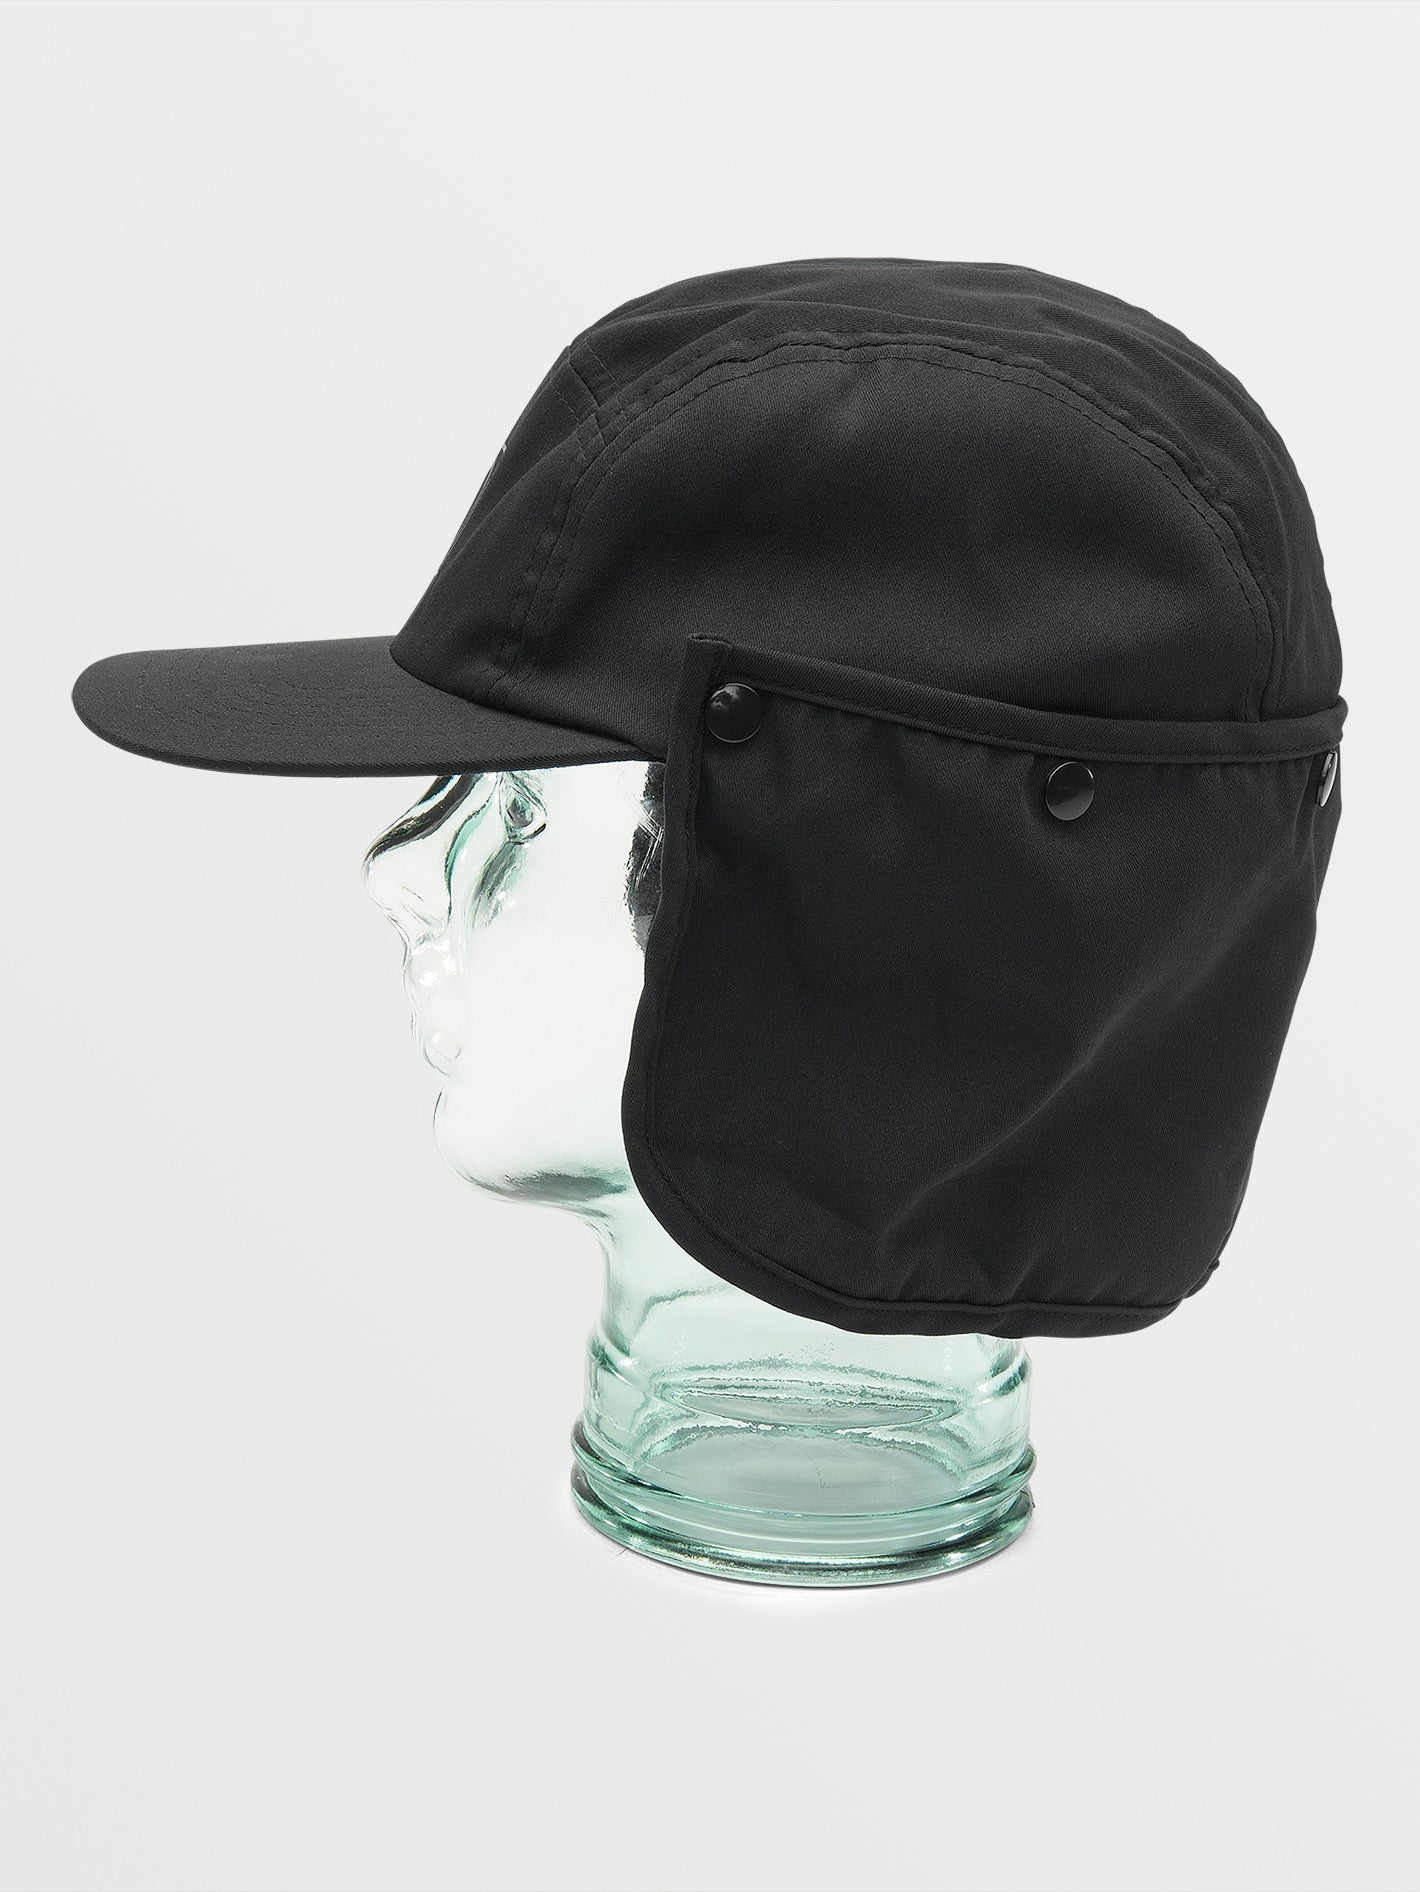 Volcom Stone Trip Flap Men's Hat, Black, Size O/S